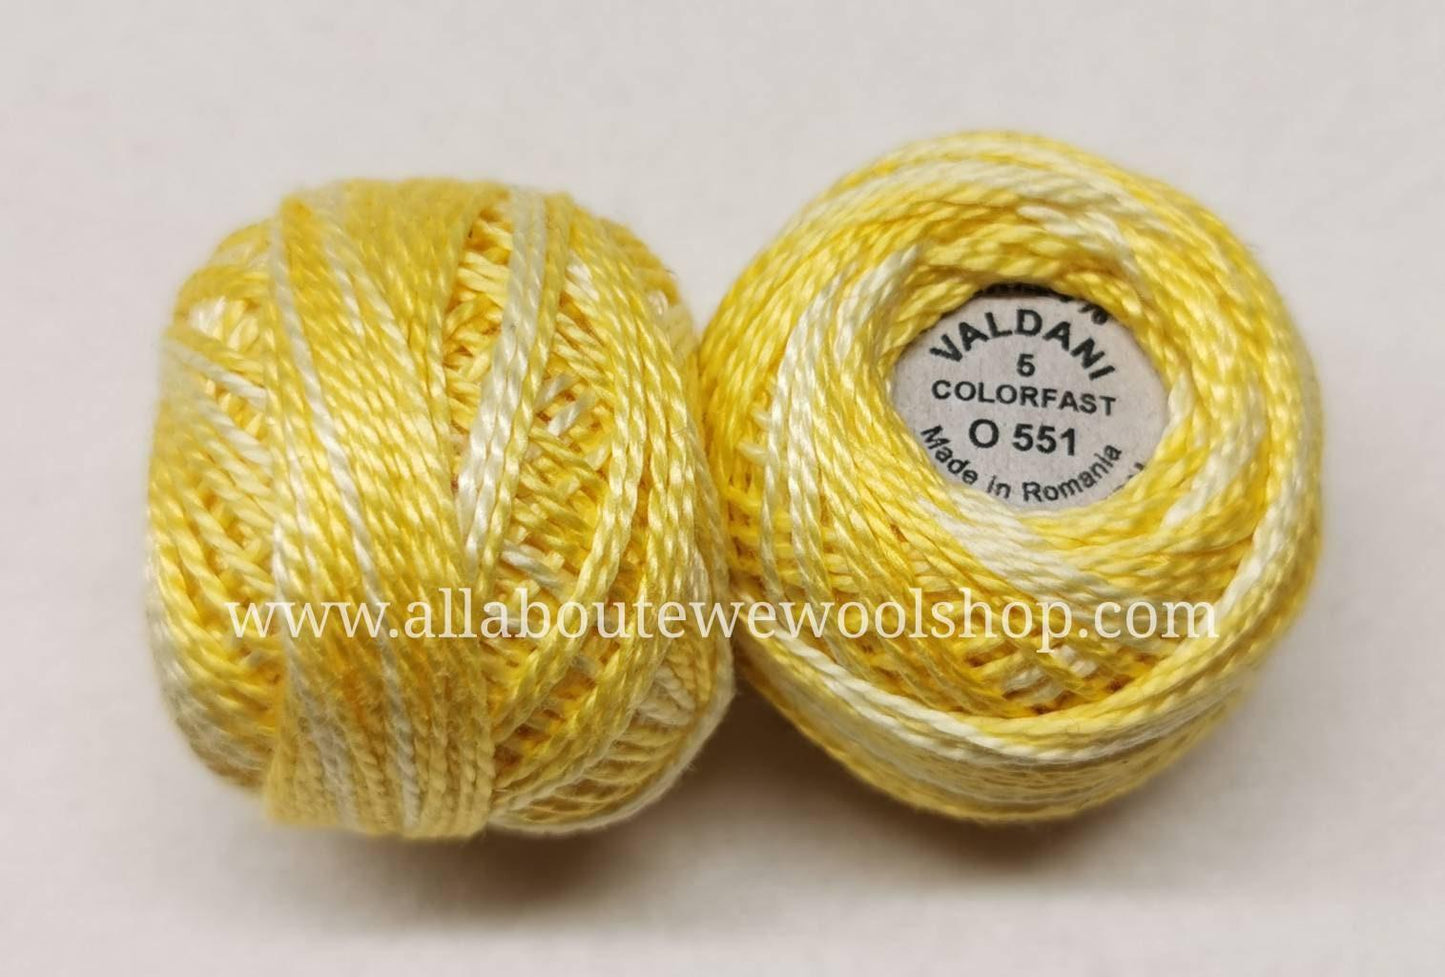 O551 #5 Valdani Pearl/Perle Cotton Thread - All About Ewe Wool Shop